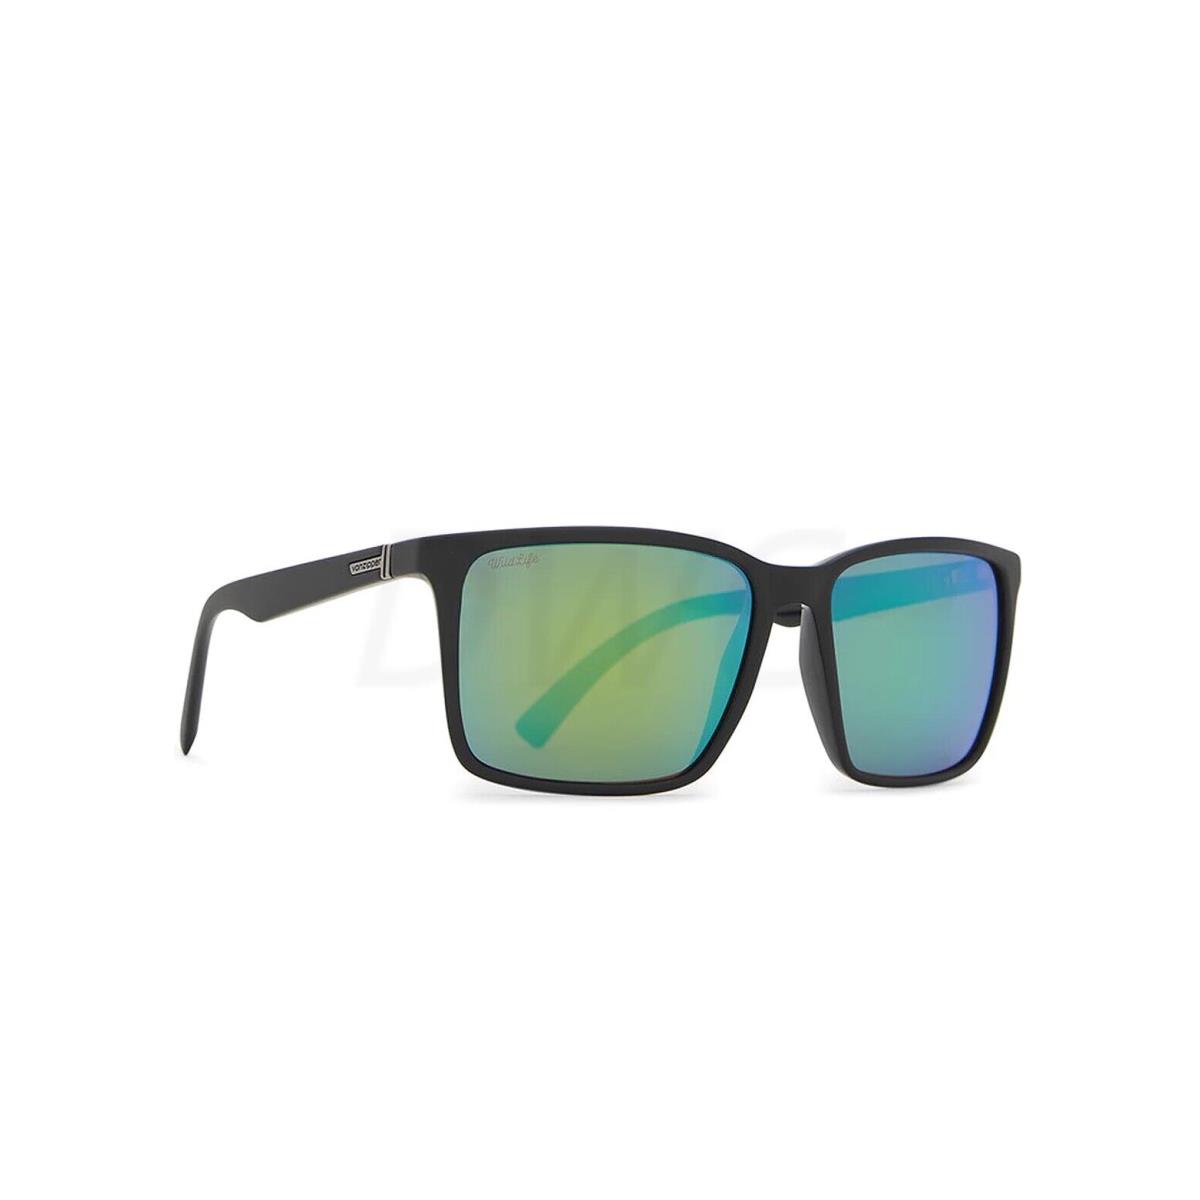 Von Zipper Lesmore Black Satin/grn Gloss Polarized Sunglasses SMPF5LES Pgg - Frame: Black, Lens: Green